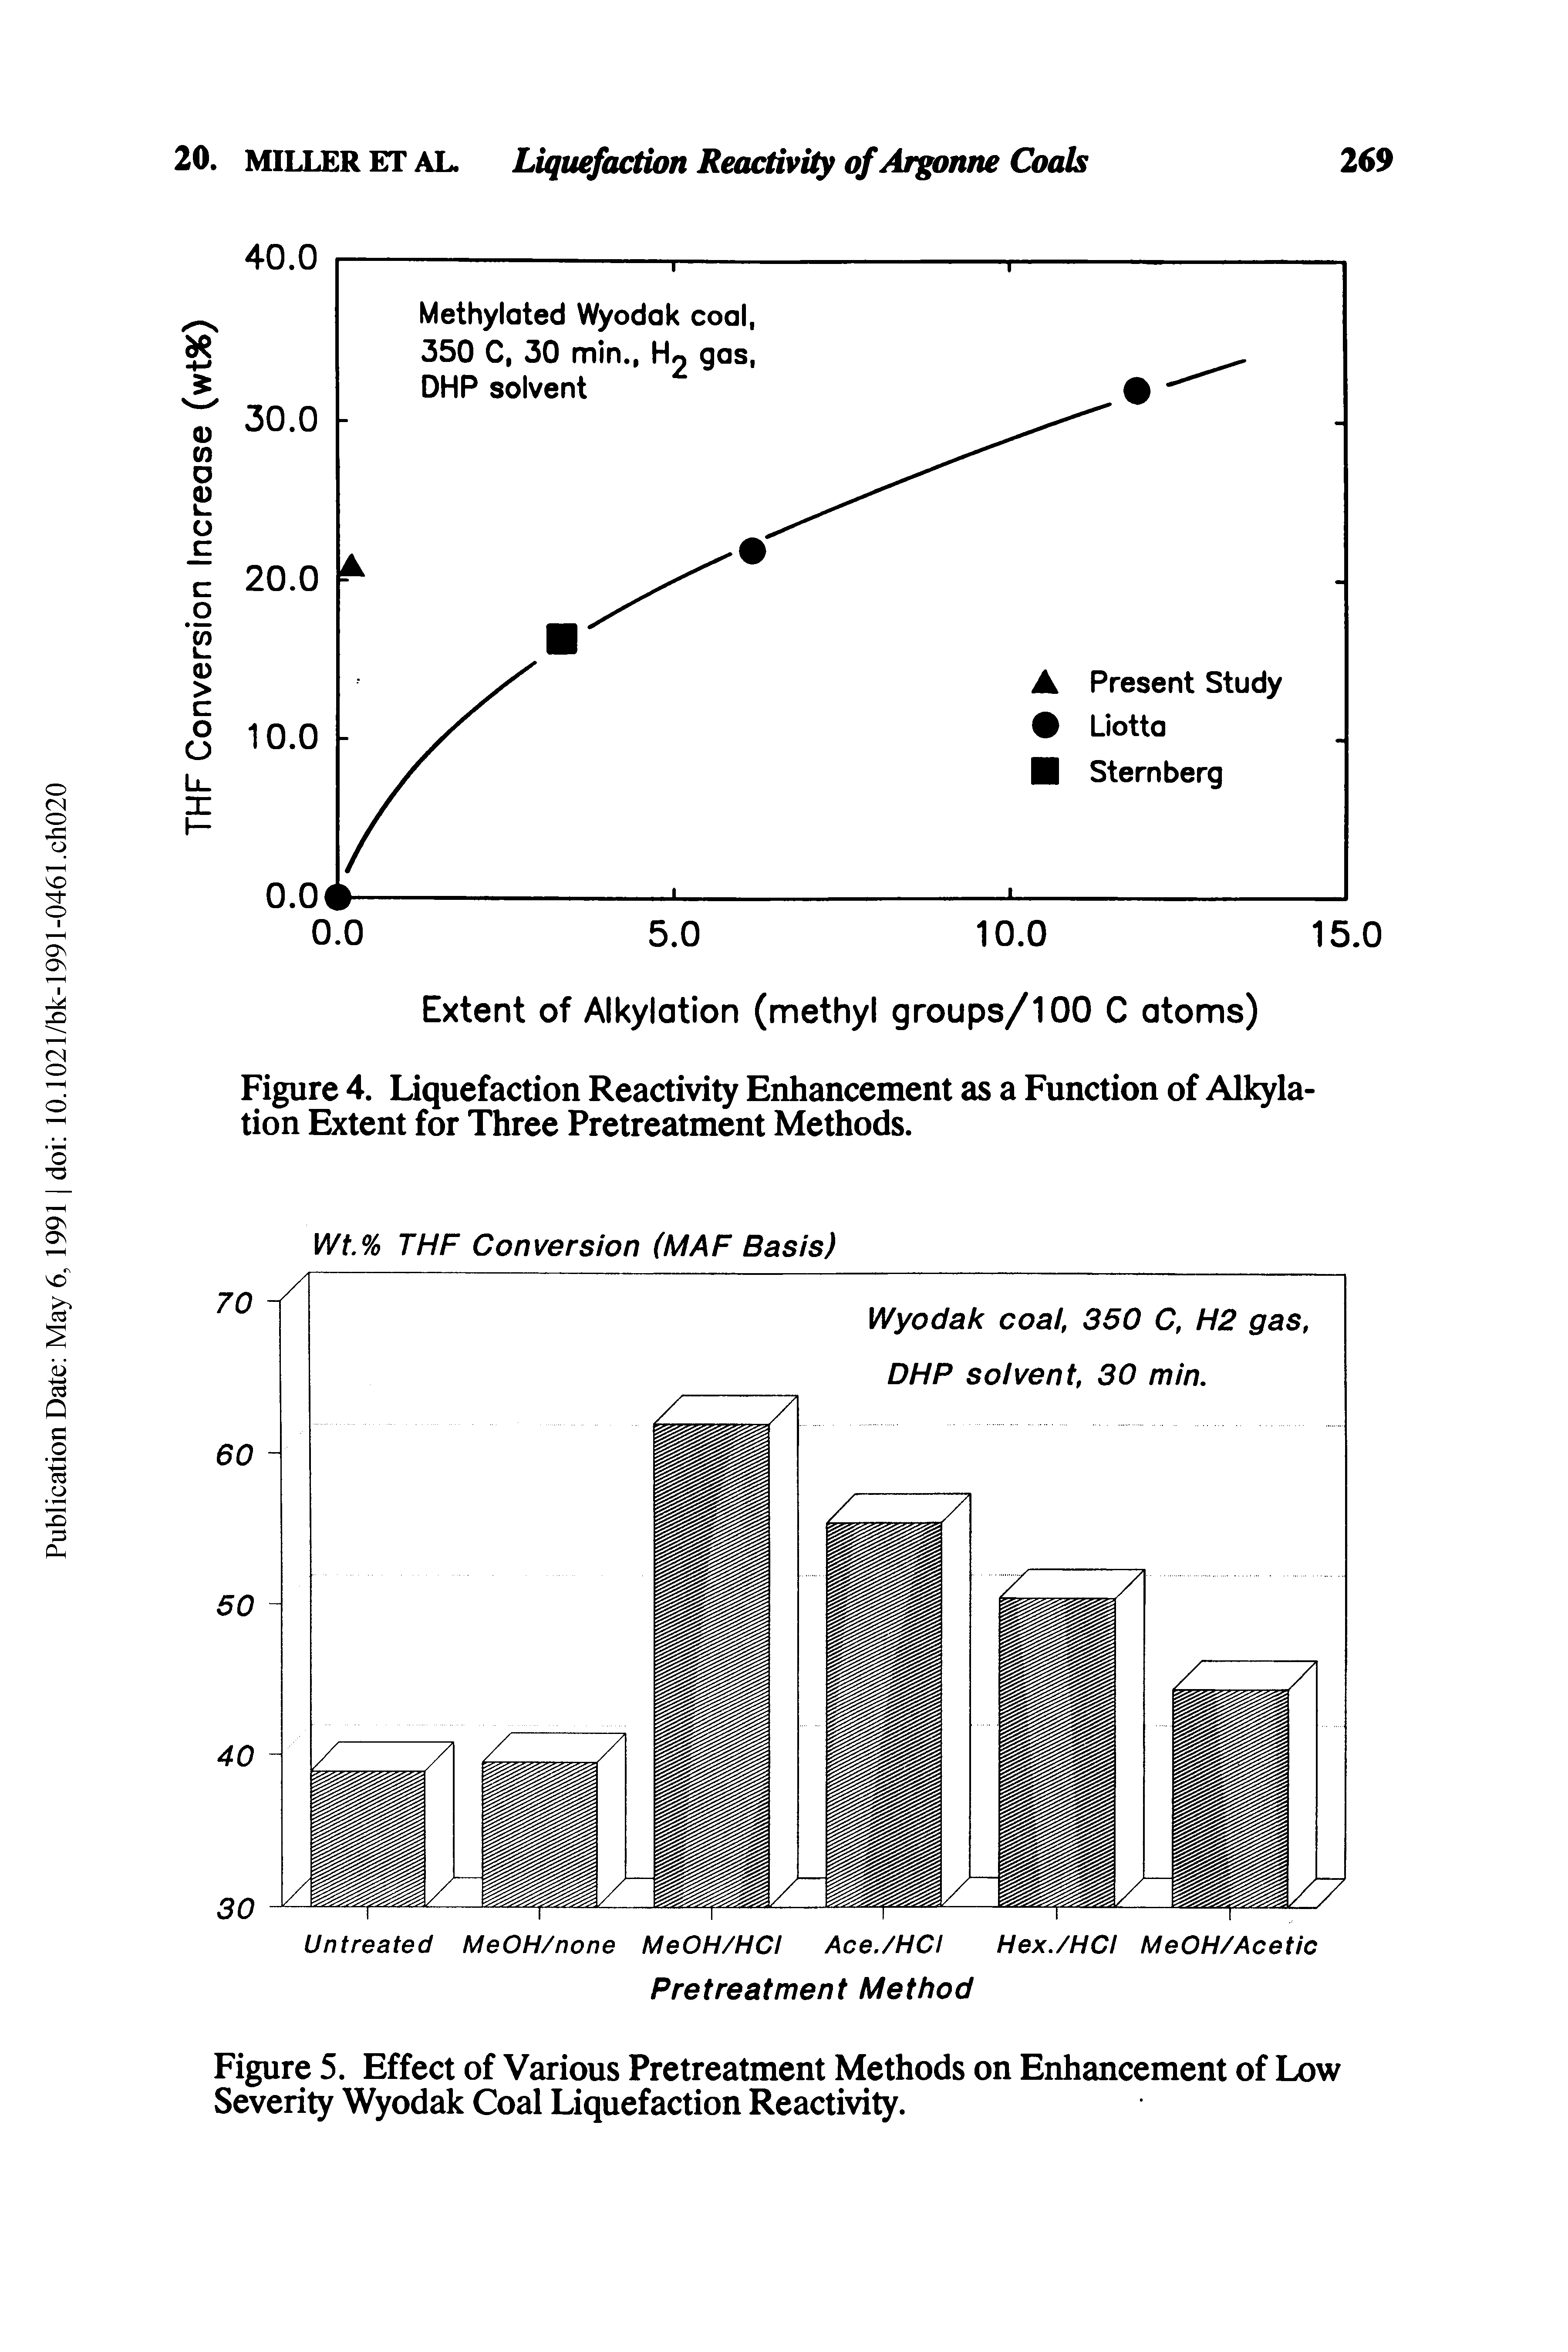 Figure 4. Liquefaction Reactivity Enhancement as a Function of Alkylation Extent for Three Pretreatment Methods.